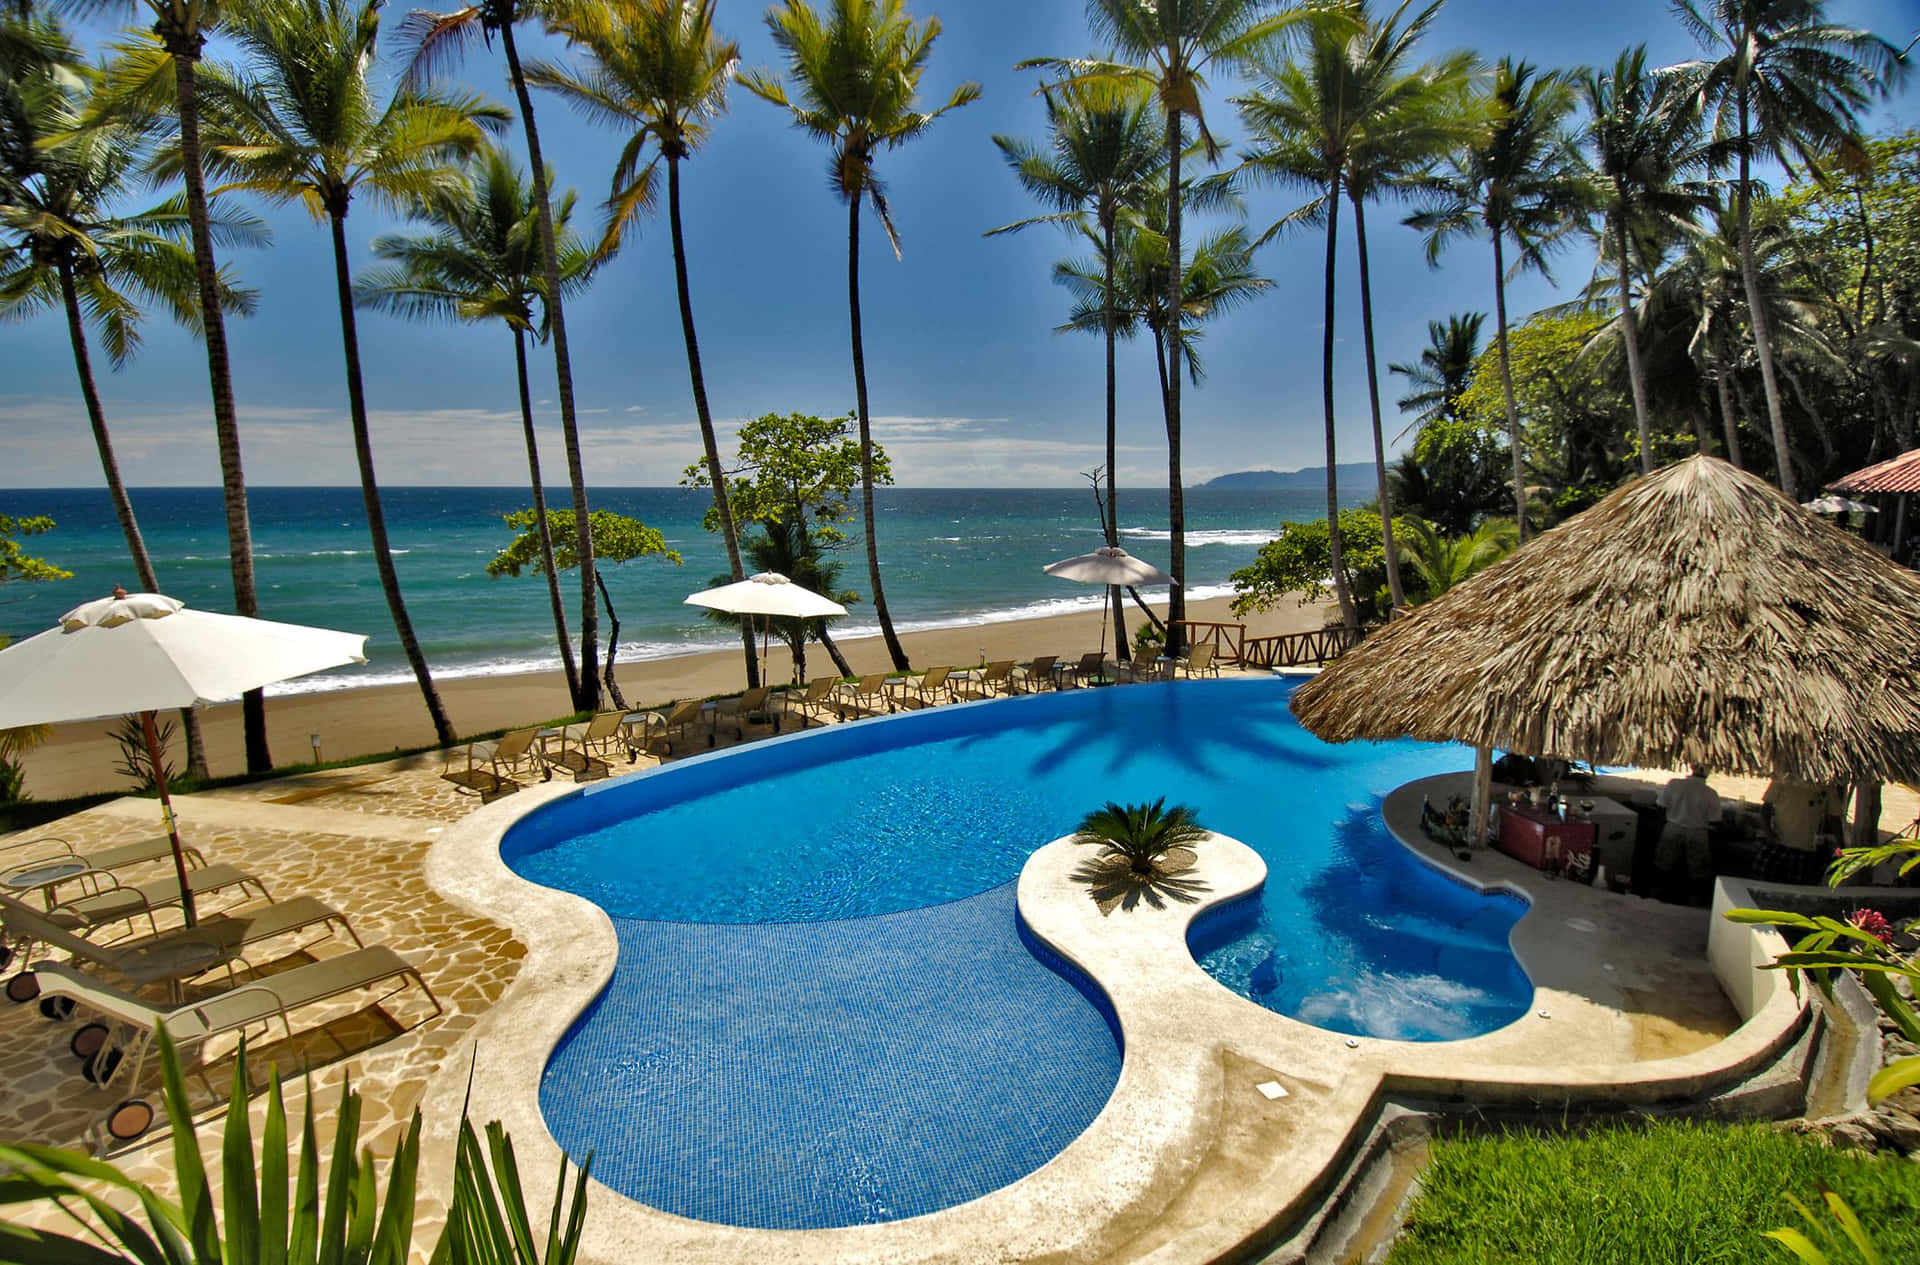 Scenic beach swimming pool overlooking the ocean Wallpaper